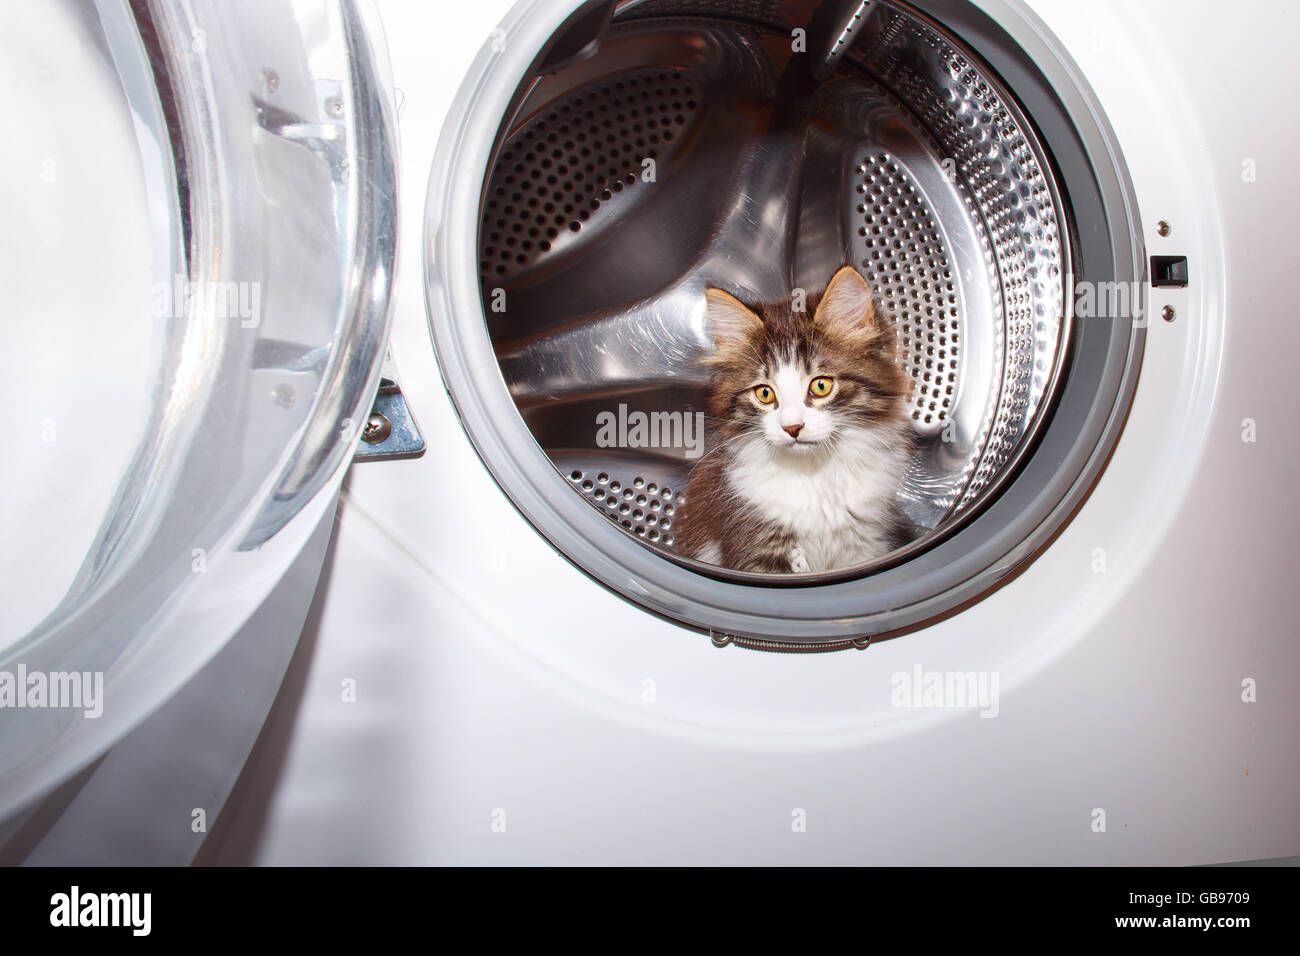 cute-kitten-hiding-in-a-washing-machine-funny-pet-GB9709.jpg